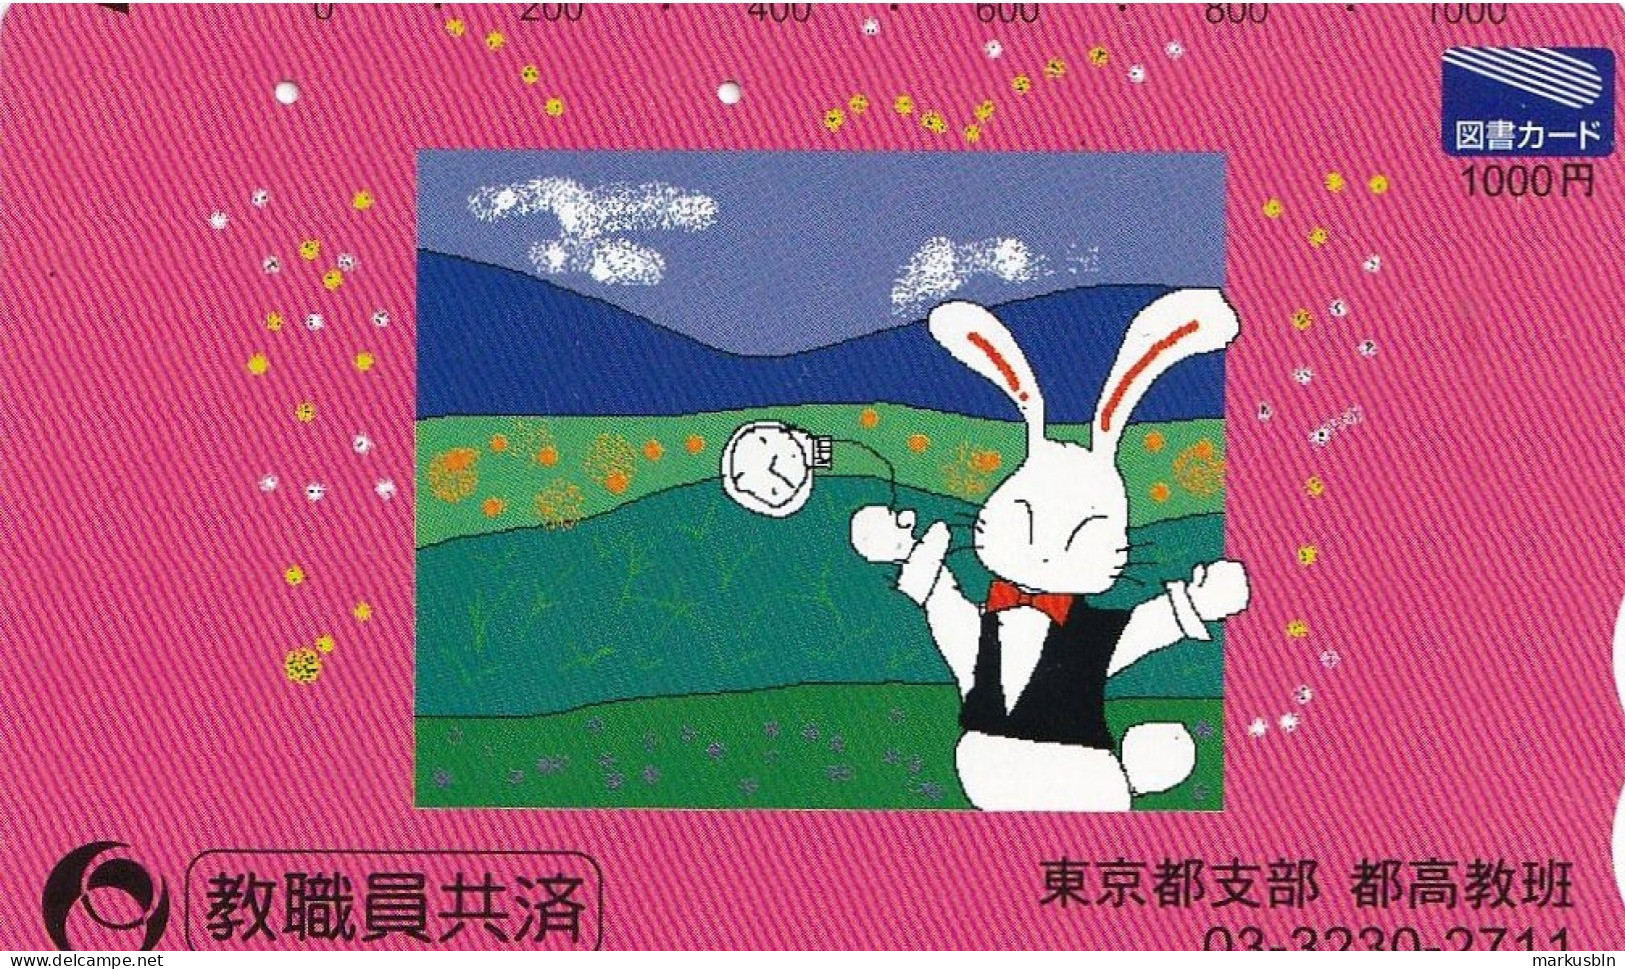 Japan Prepaid Libary Card 1000 - Drawing Animals Rabbit Art Alice In Wonderland - Japan